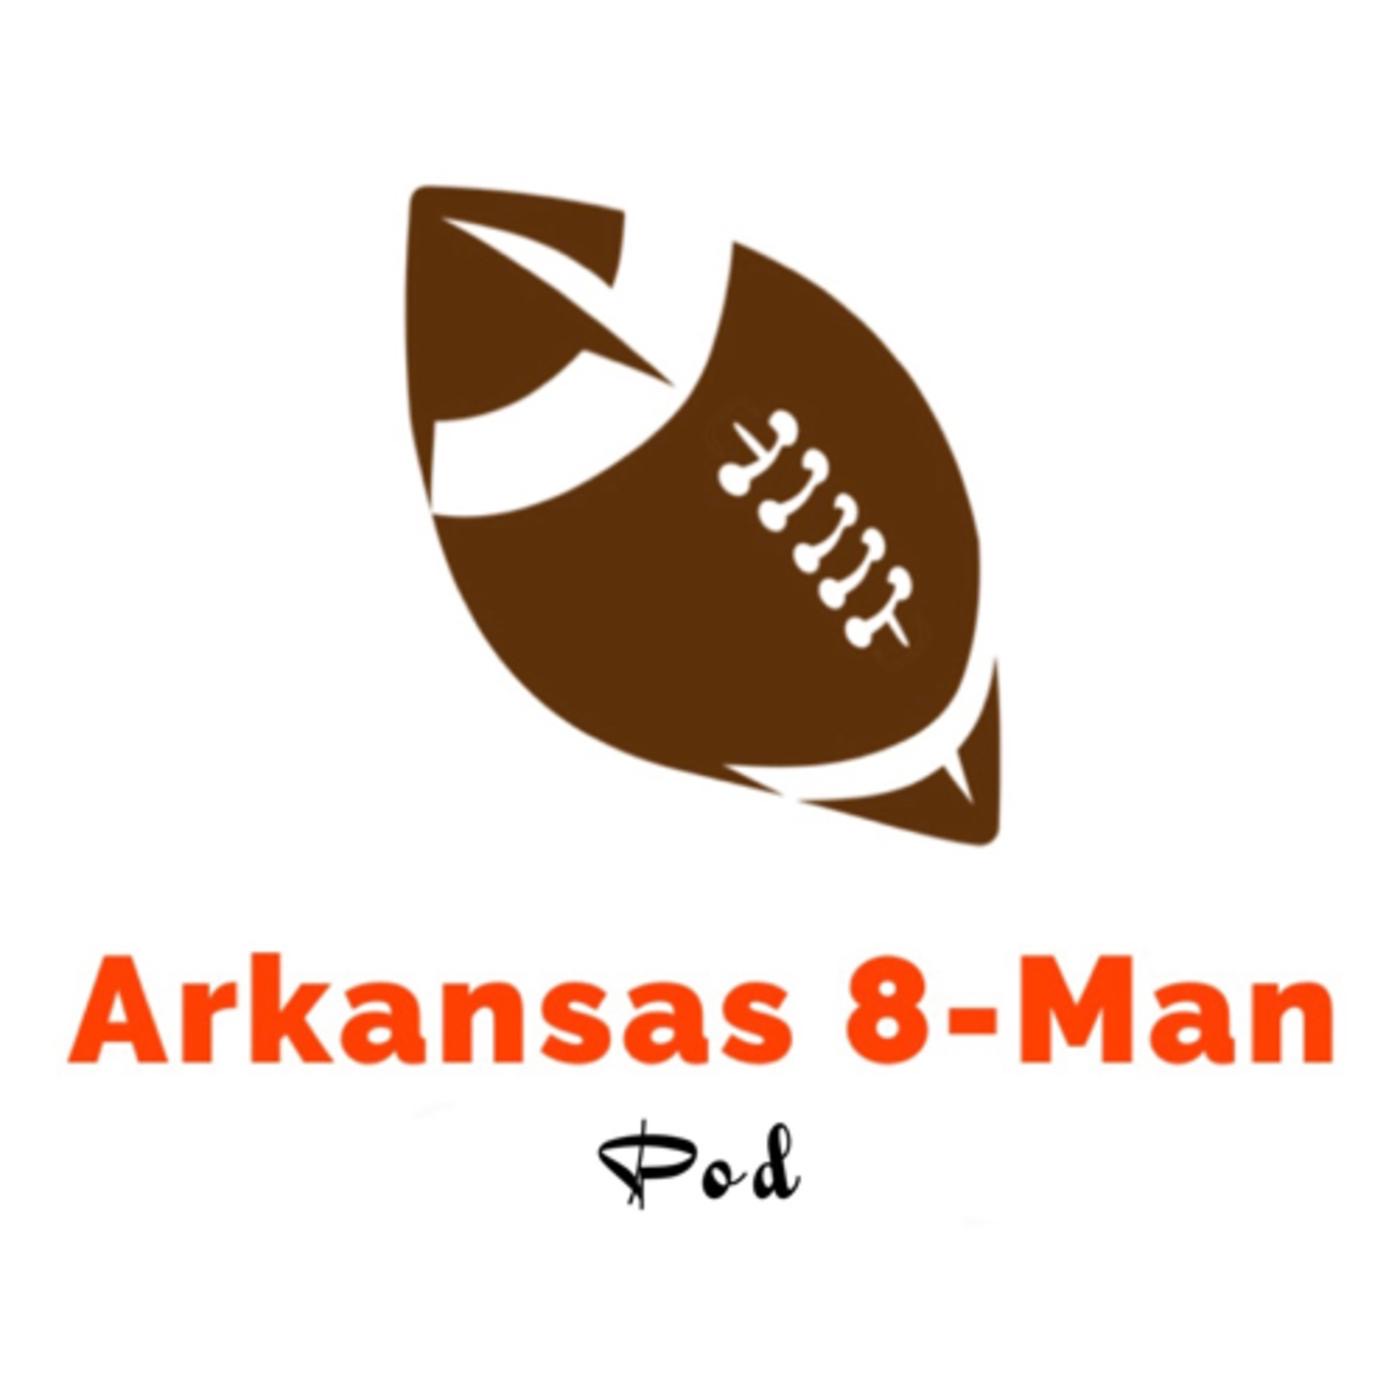 Arkansas 8-Man Pod Episode 4